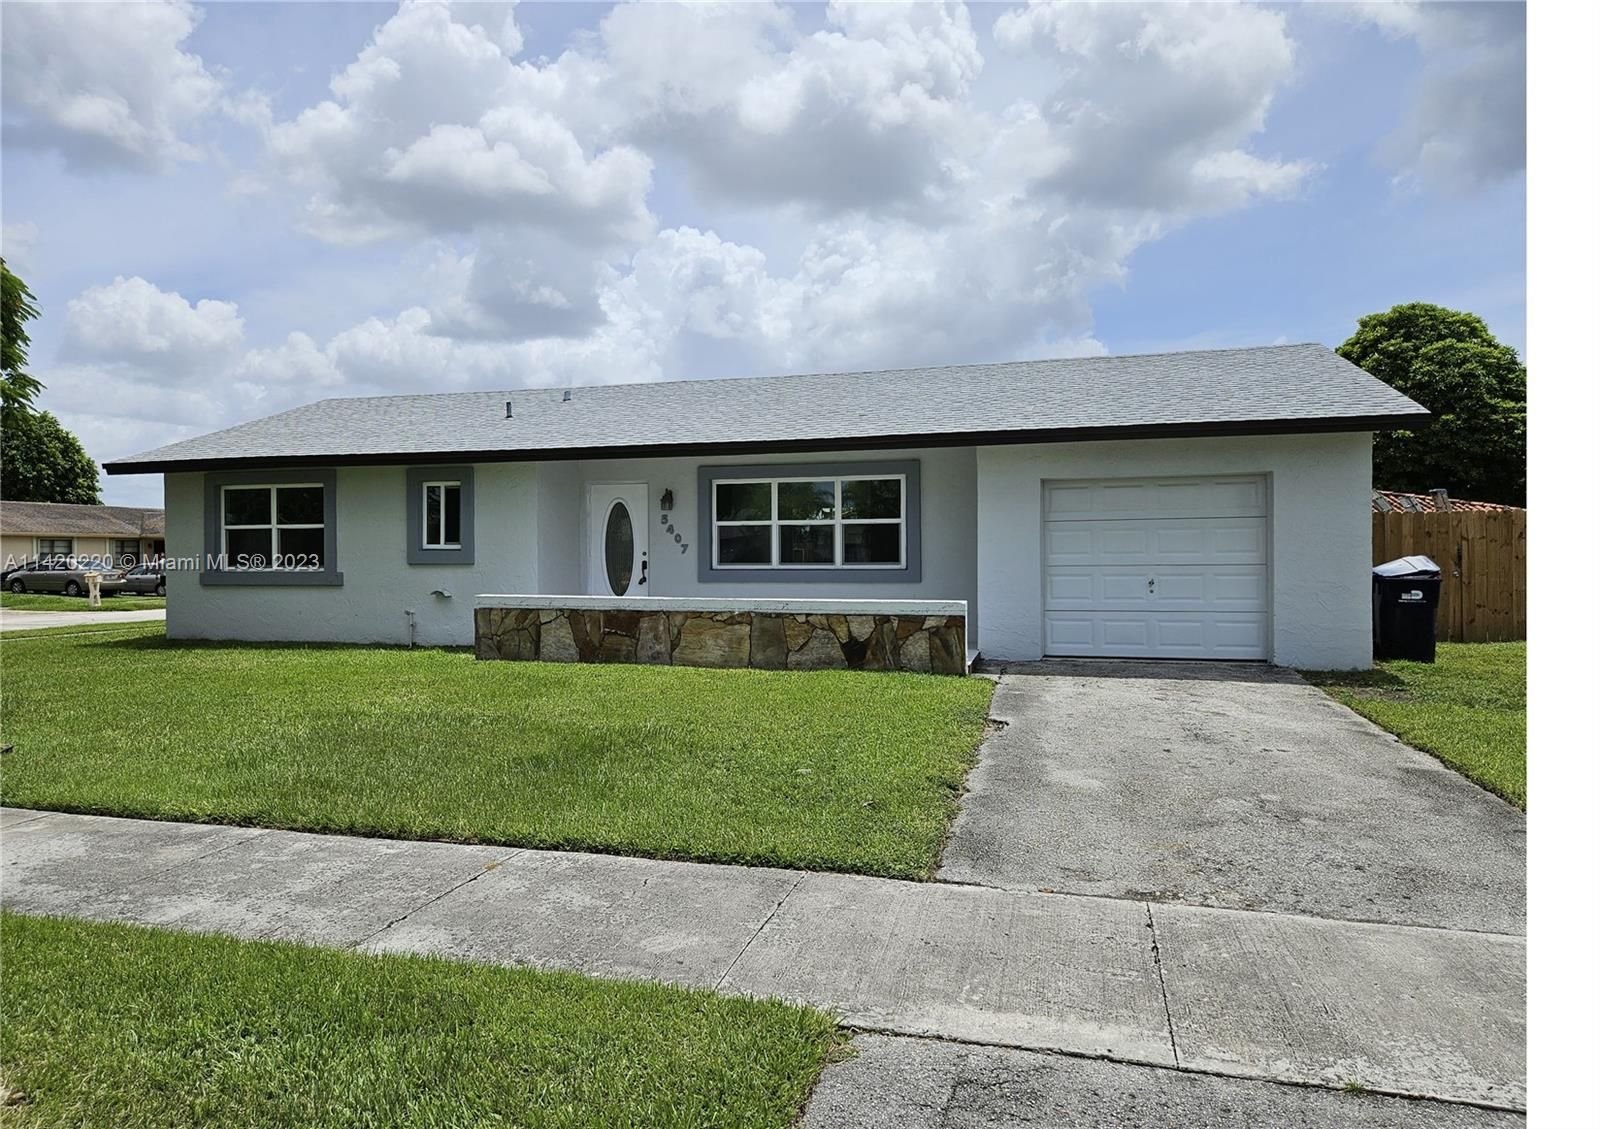 Real estate property located at 5407 134th Pl, Miami-Dade County, Miami, FL